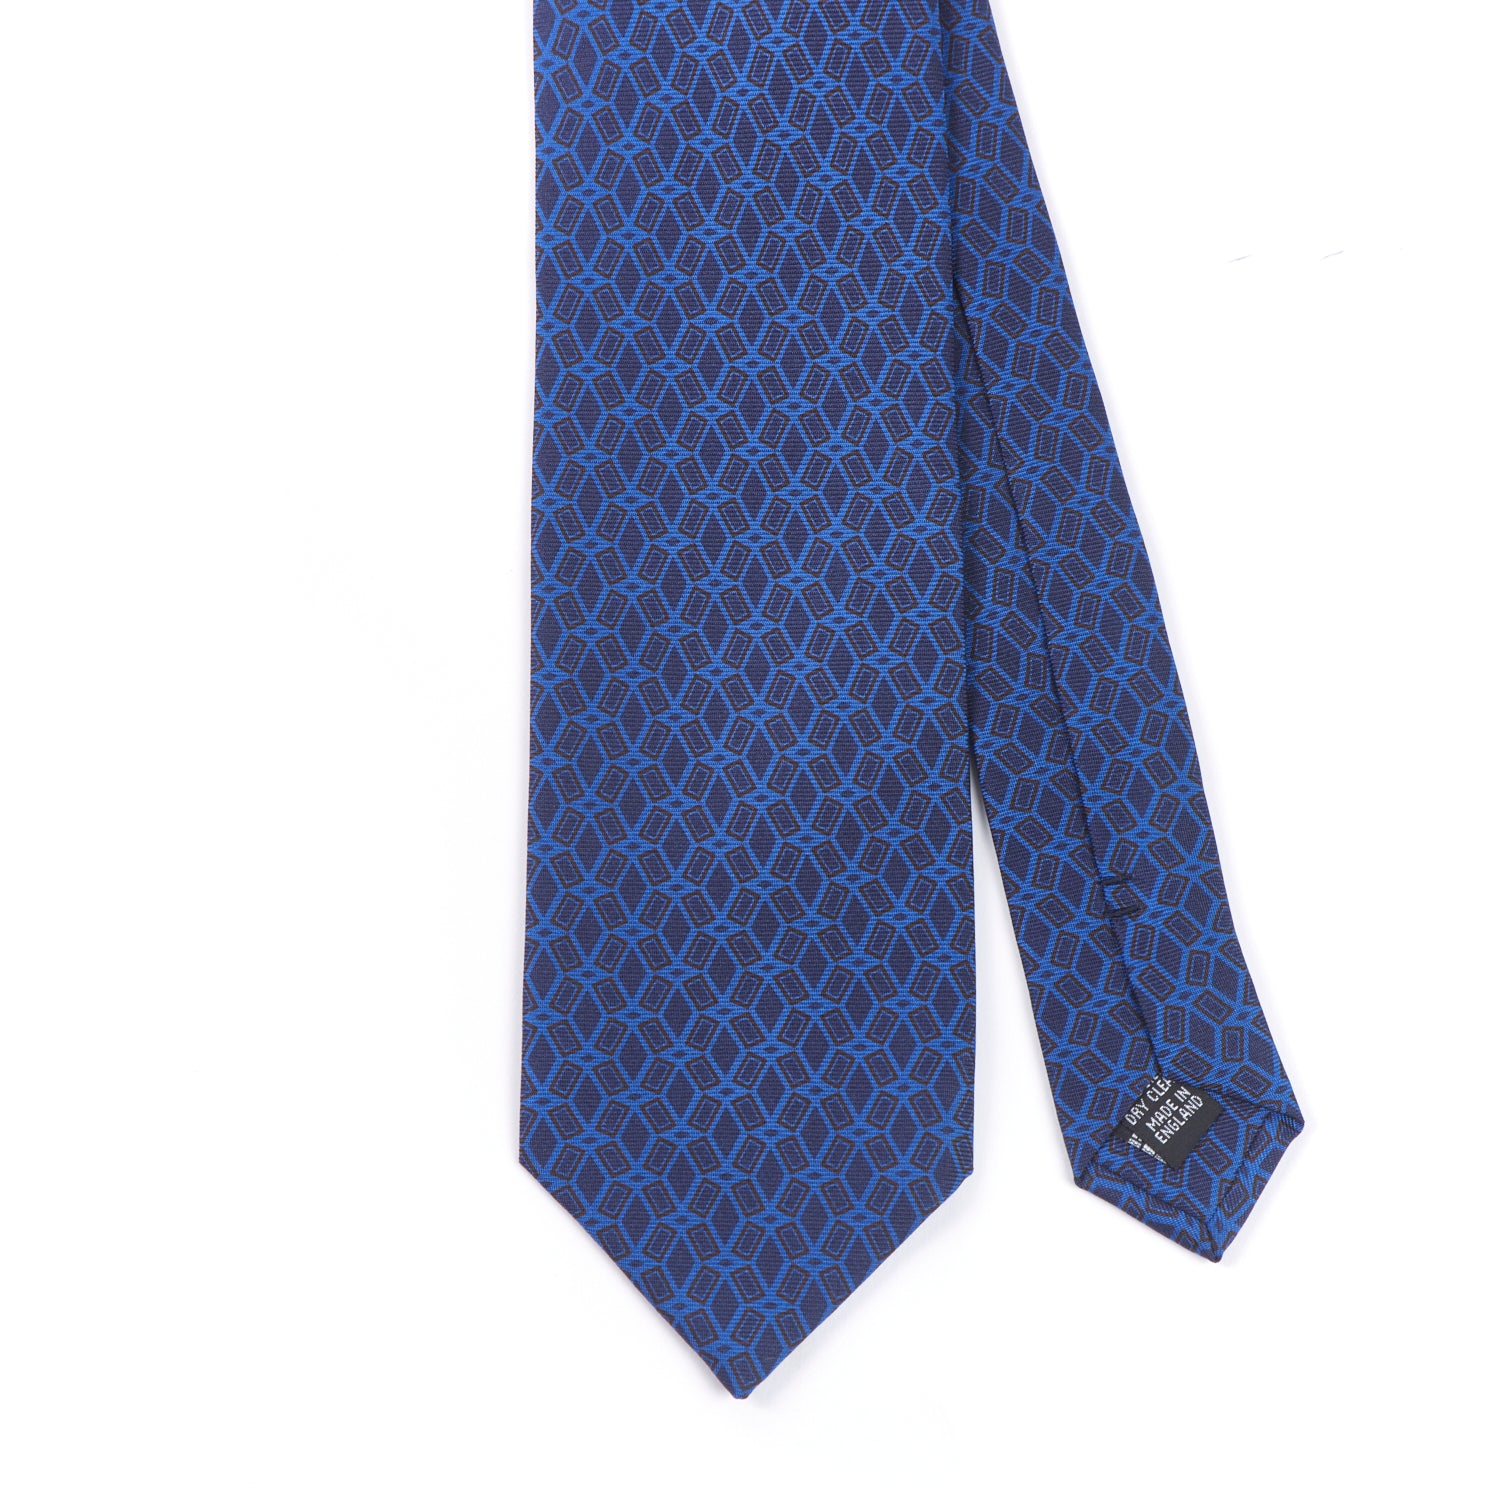 A KirbyAllison.com handmade Sovereign Grade Lido Burgundy Ancient Madder Tie, 150cm, with a geometric pattern.